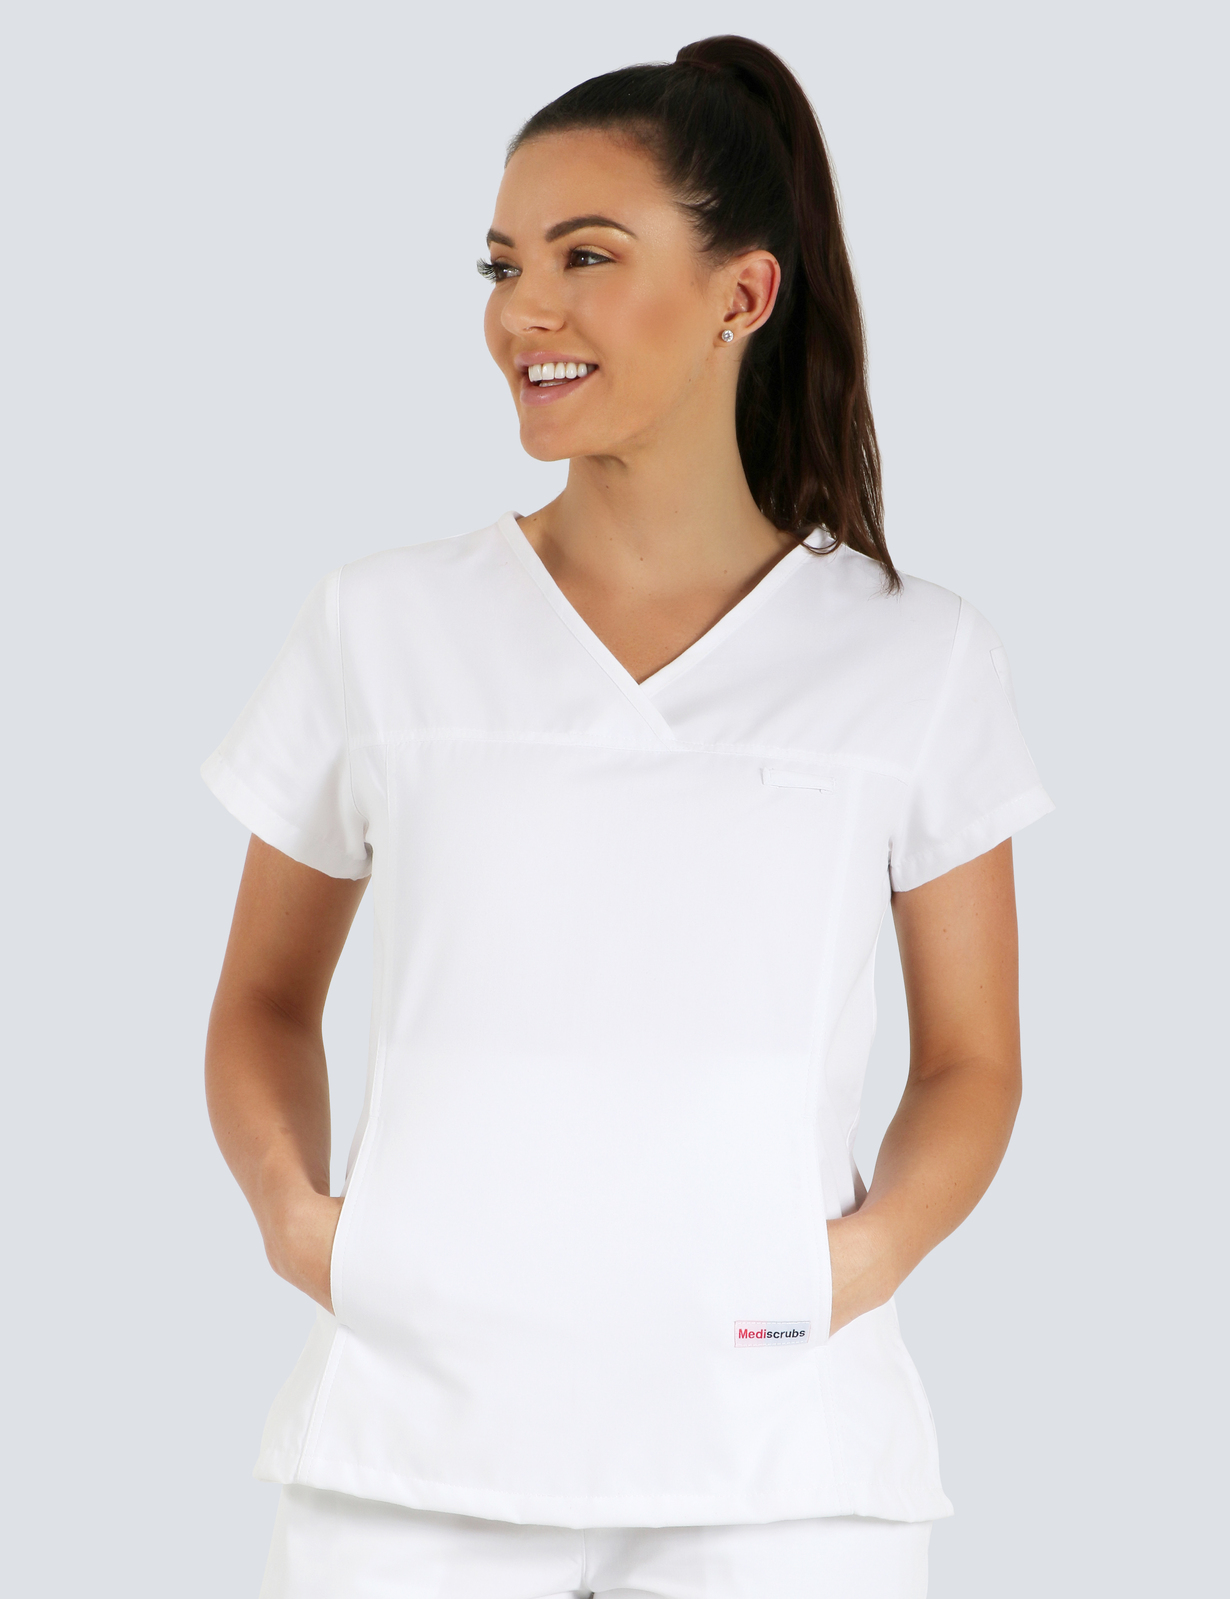 Queensland Children's Hospital Emergency Department Senior Medical Officer Uniform Top Bundle  (Women's Fit Top in White  incl Logos)